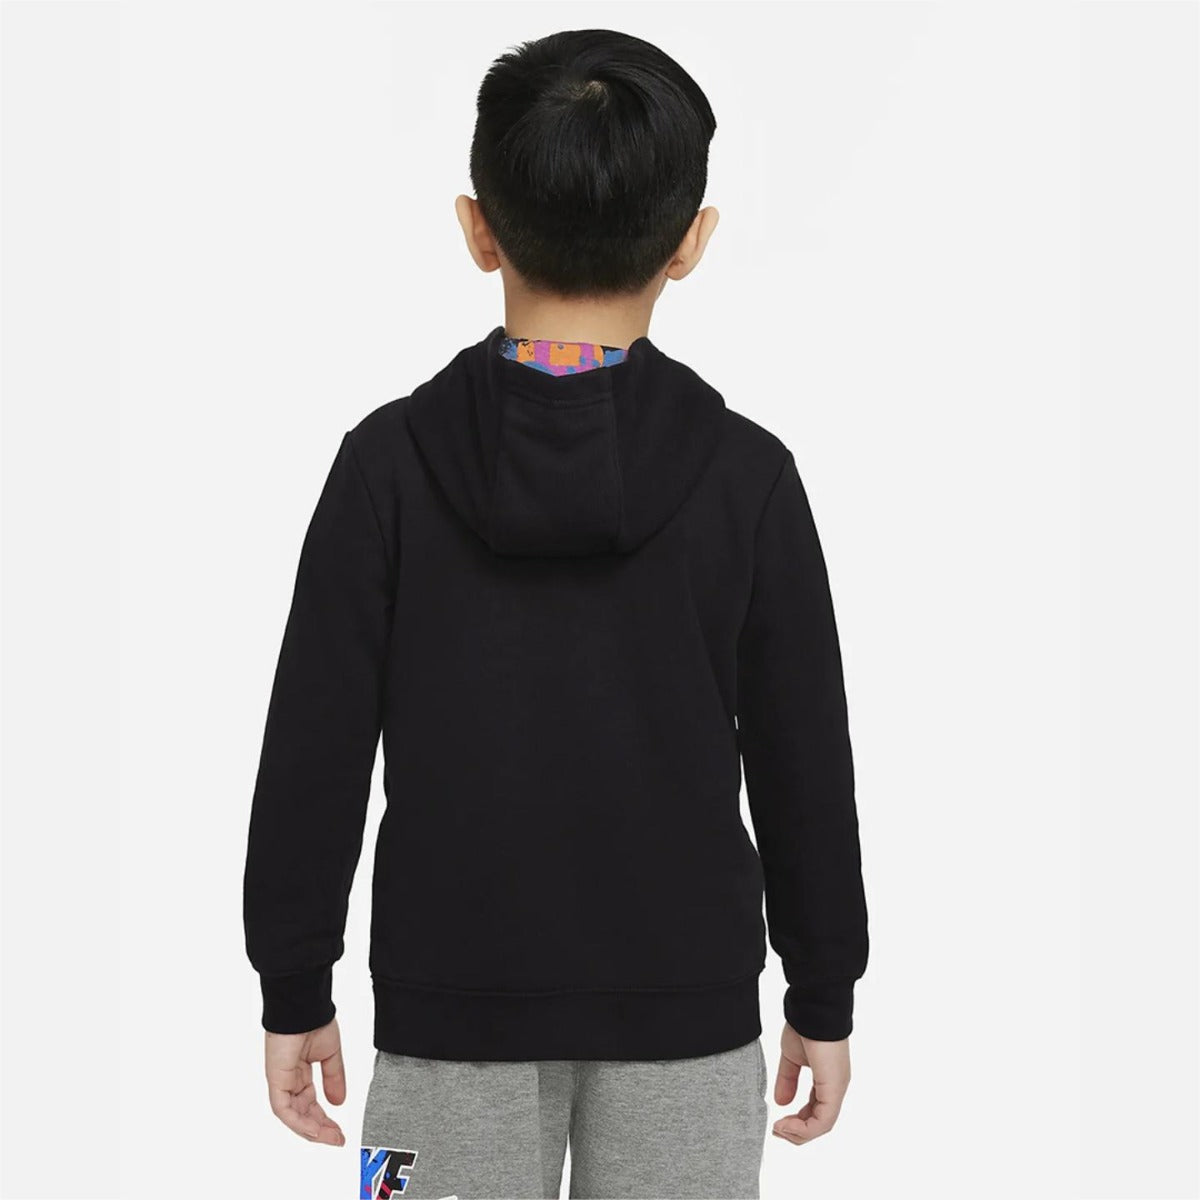 Nike Sportswear Kinder-Sweatshirt – Schwarz